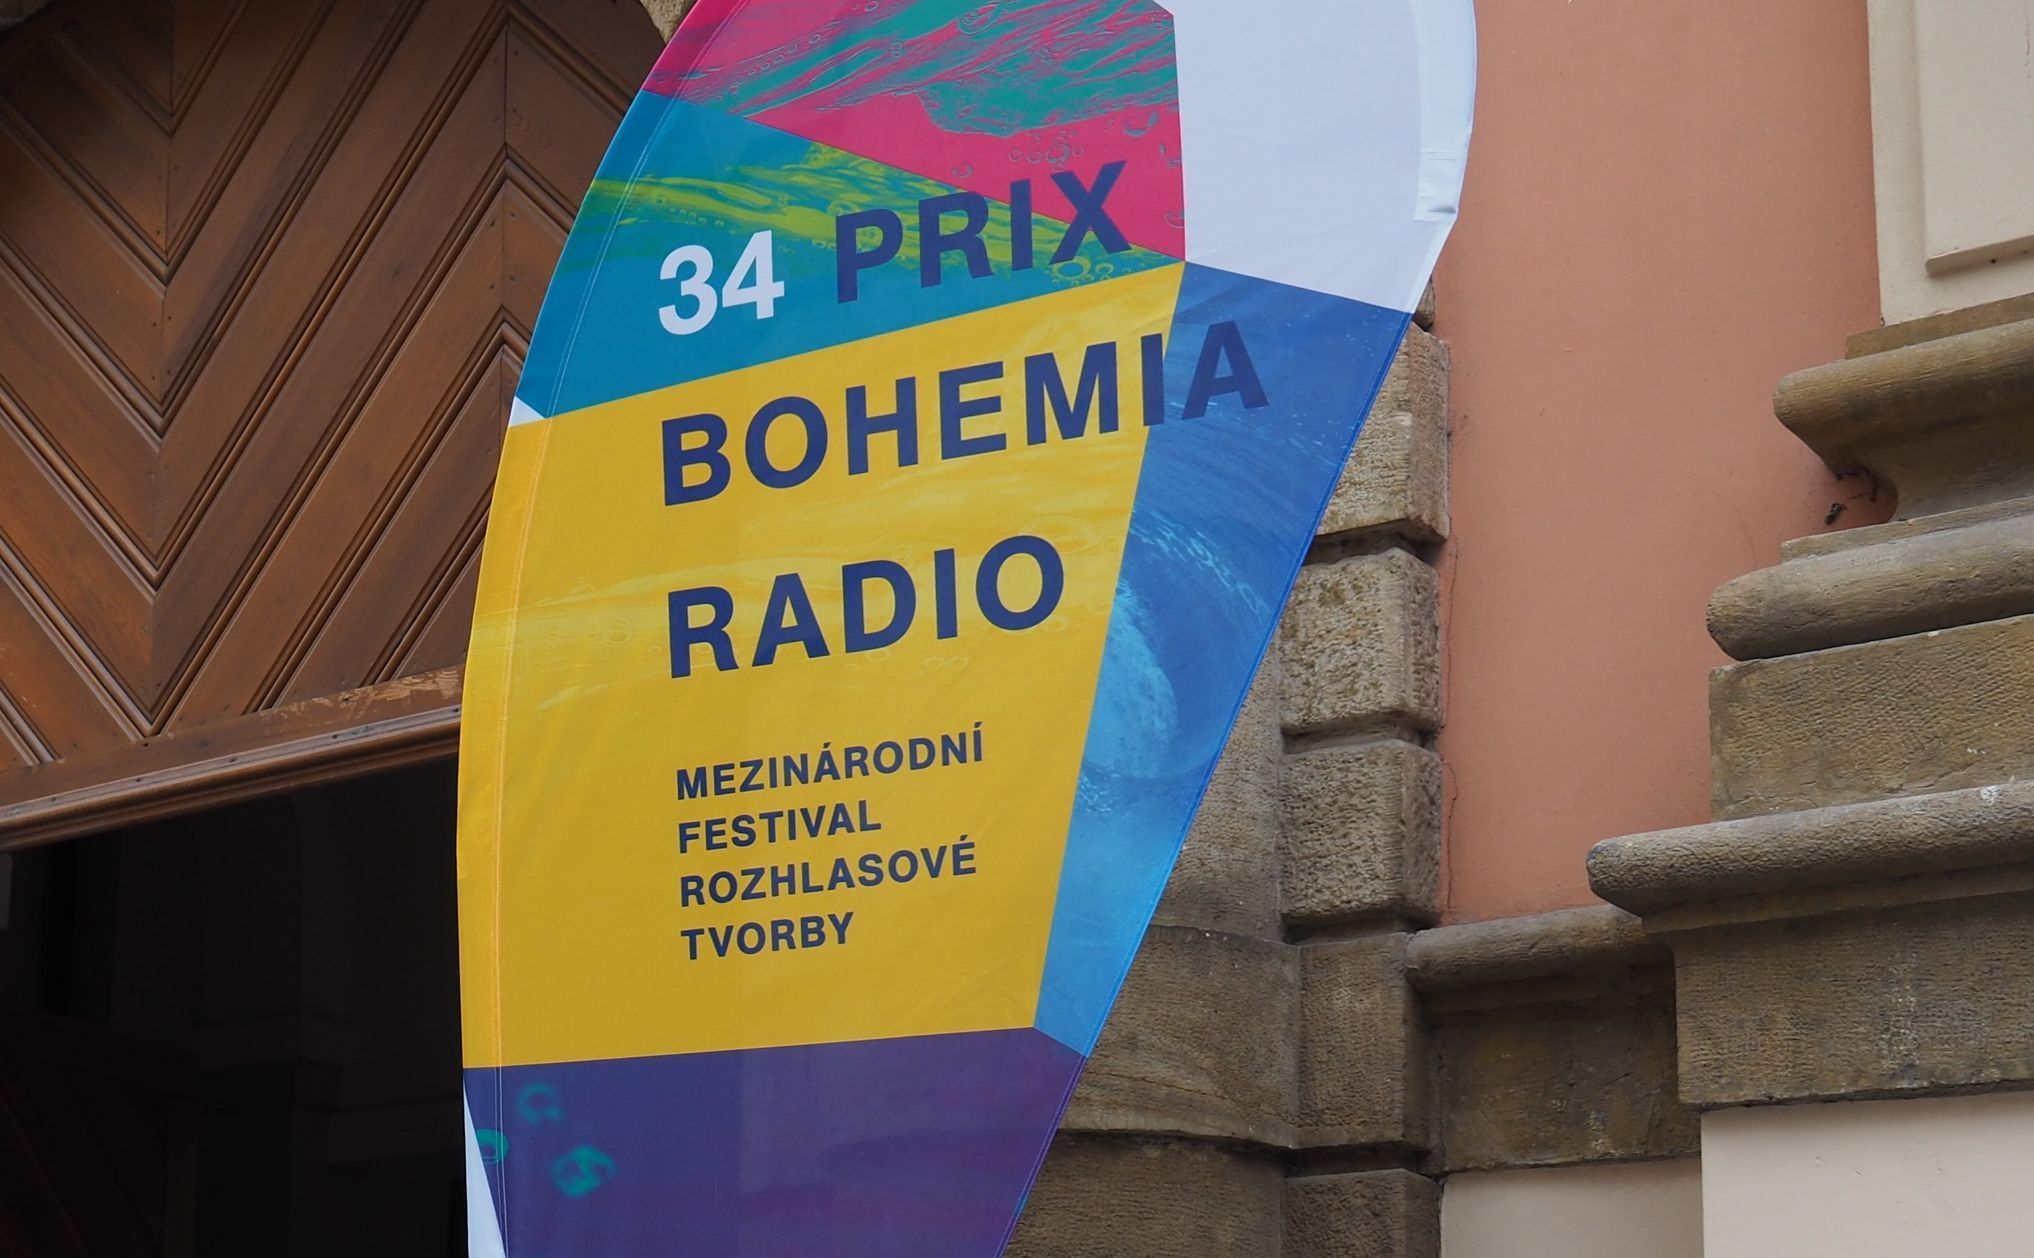 Prix Bohemia Radio